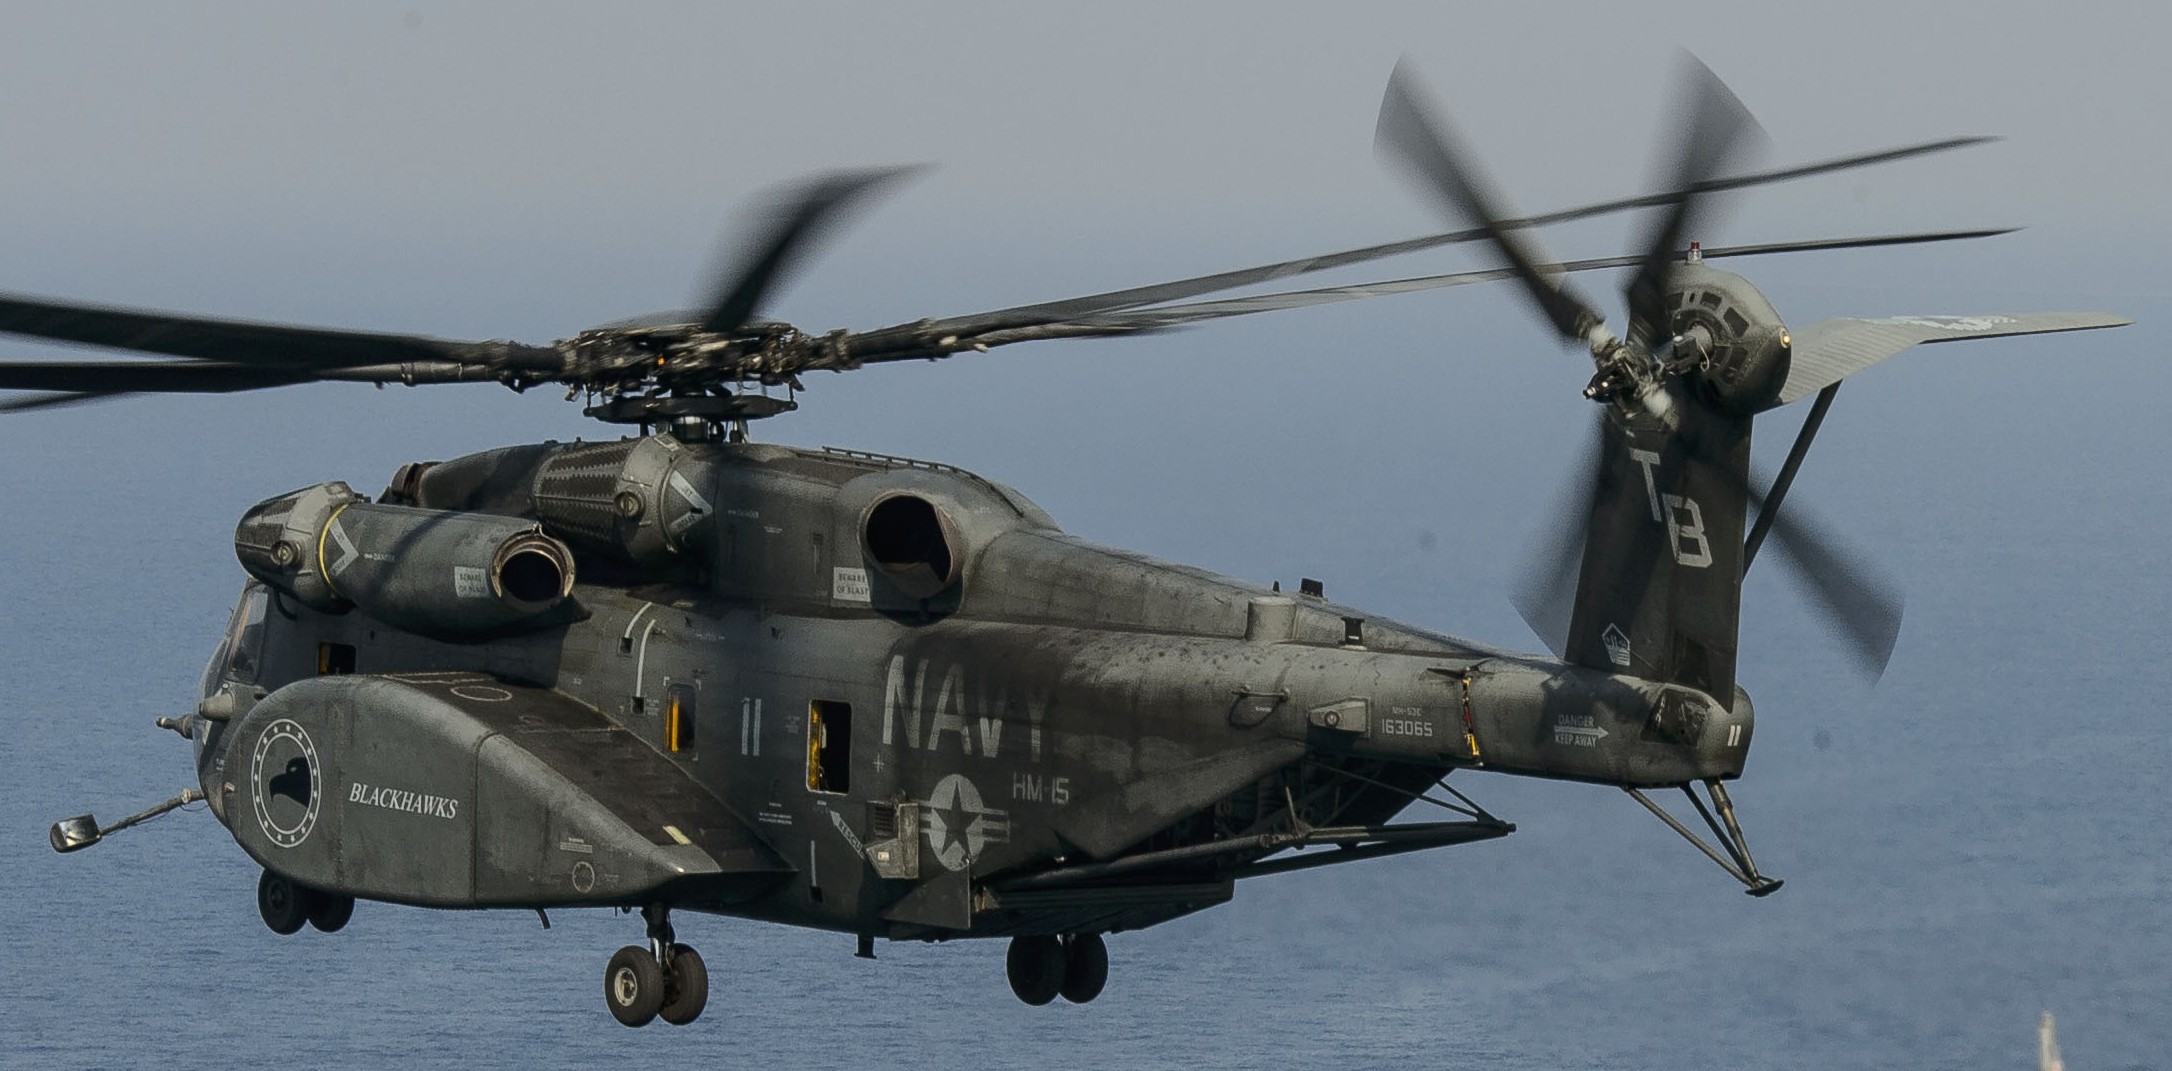 hm-15 blackhawks helicopter mine countermeasures squadron navy mh-53e sea dragon 28 bahrain